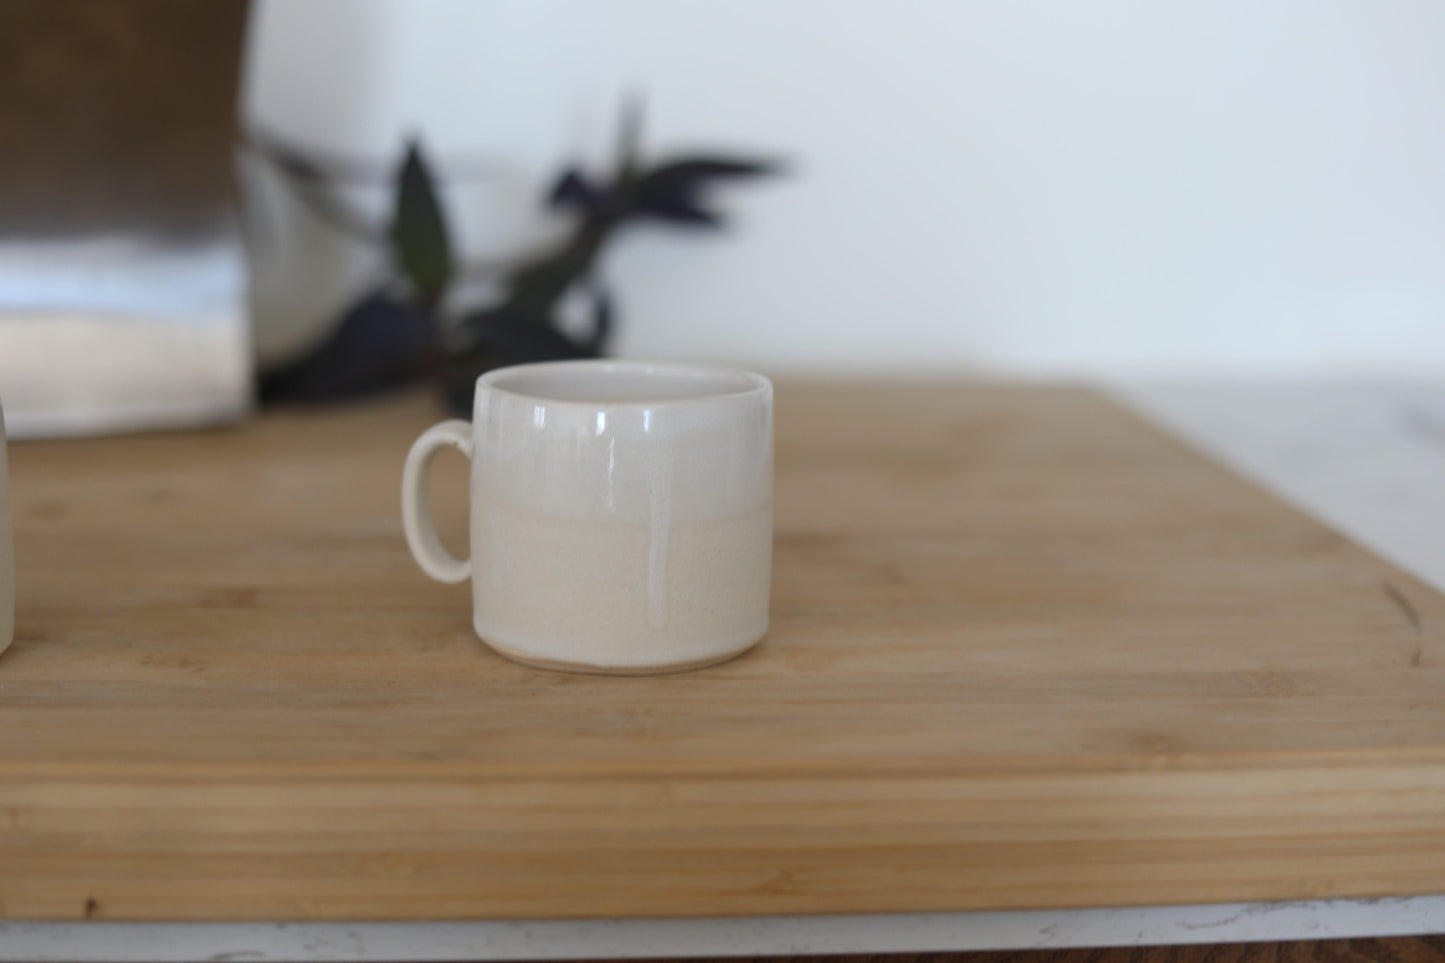 Pepo Ceramics Simple Espresso Cup/Kids Cup - soft matte + gloss white